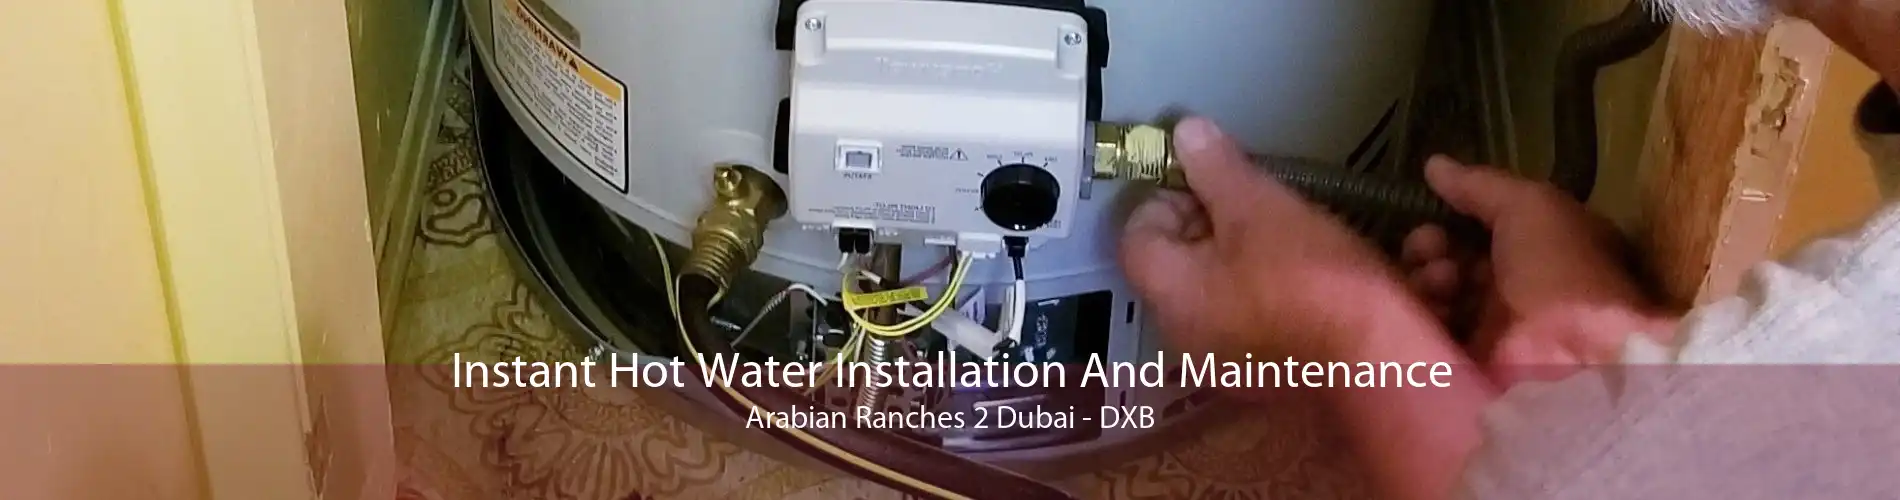 Instant Hot Water Installation And Maintenance Arabian Ranches 2 Dubai - DXB